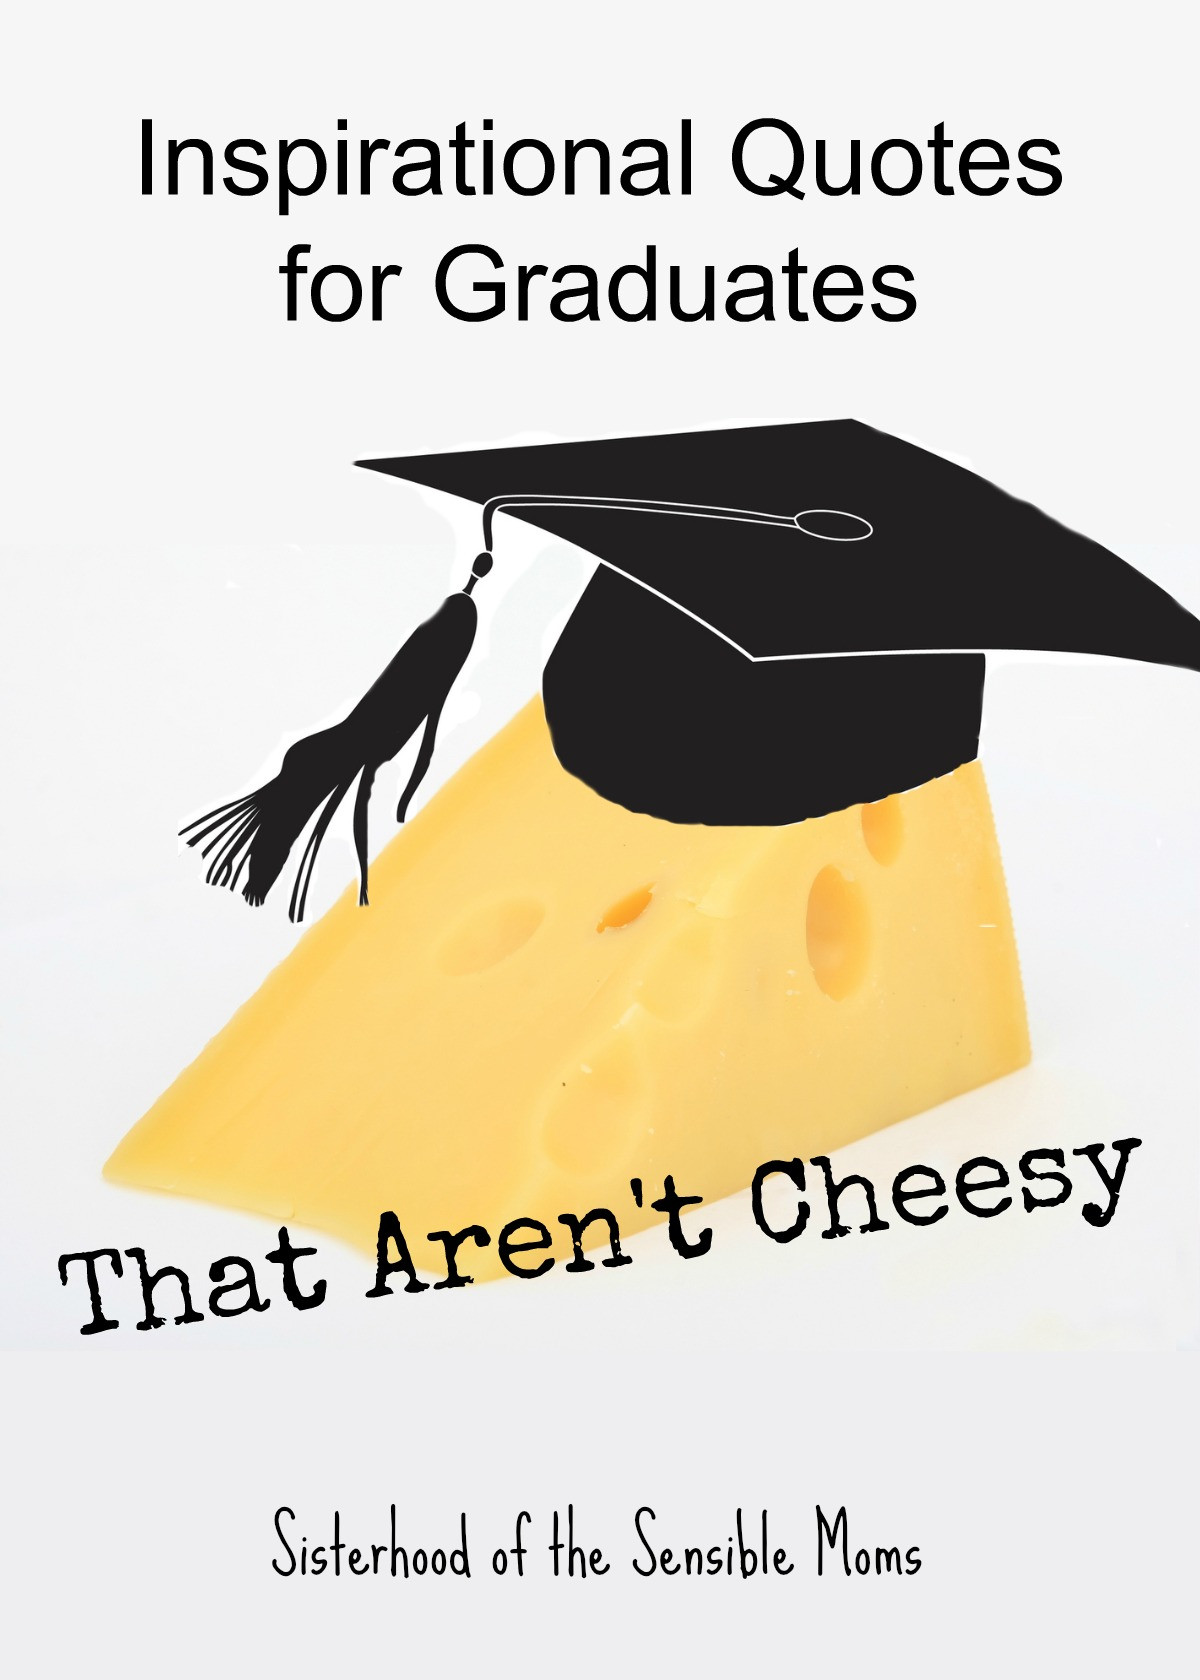 Inspirational Quote For Graduating Seniors
 Inspirational Quotes for Graduates That Aren t Cheesy